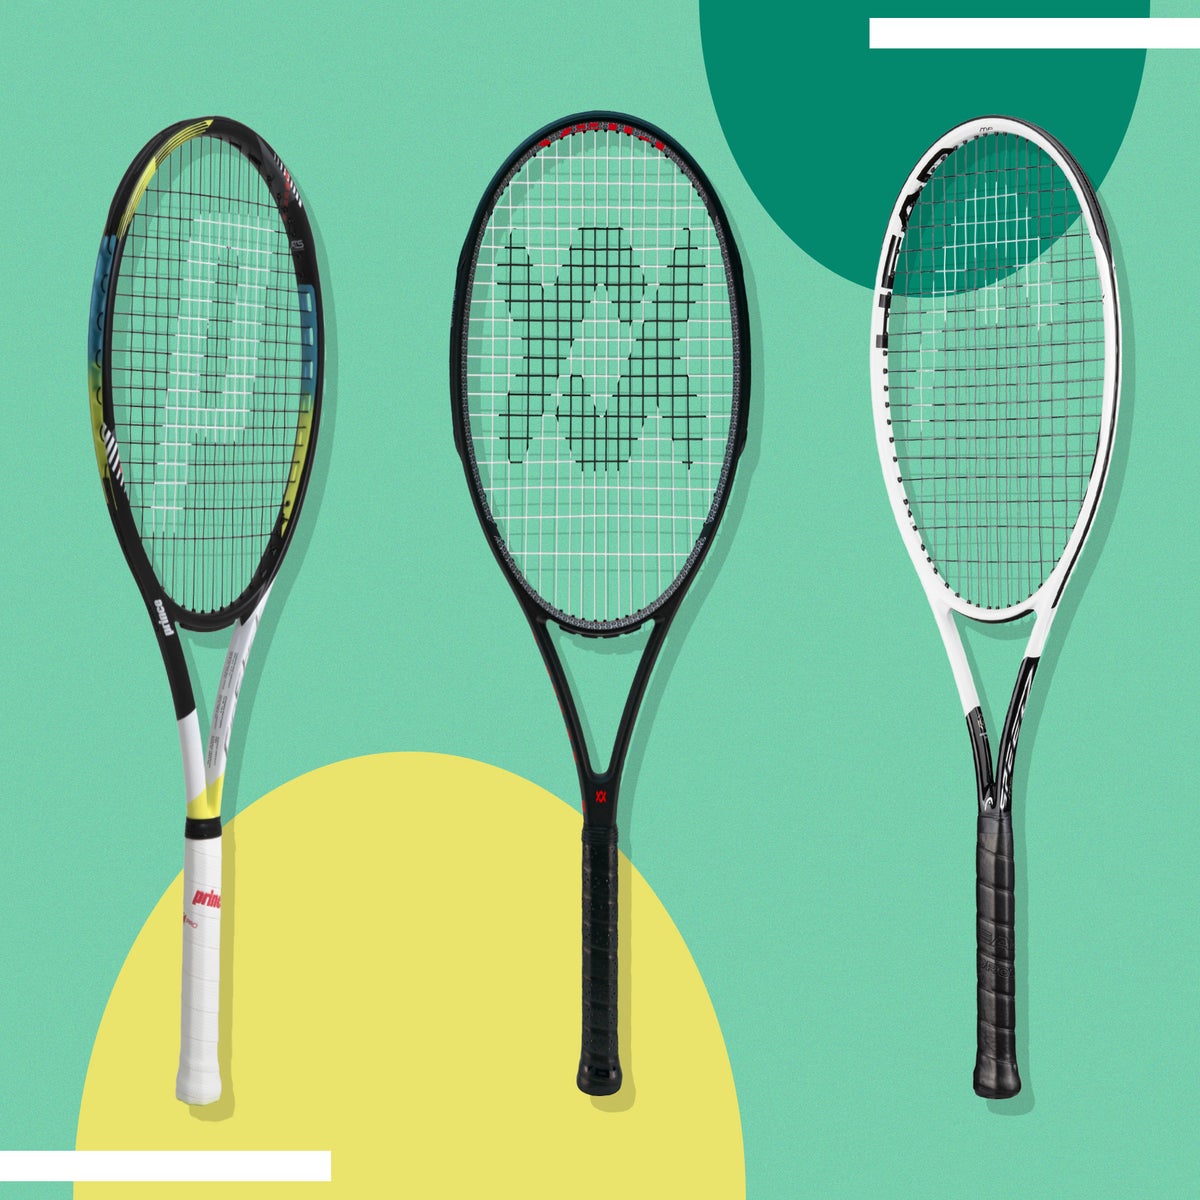 Soldaat krom spleet Best tennis rackets 2021: Wilson, Babolat, Head and more | The Independent